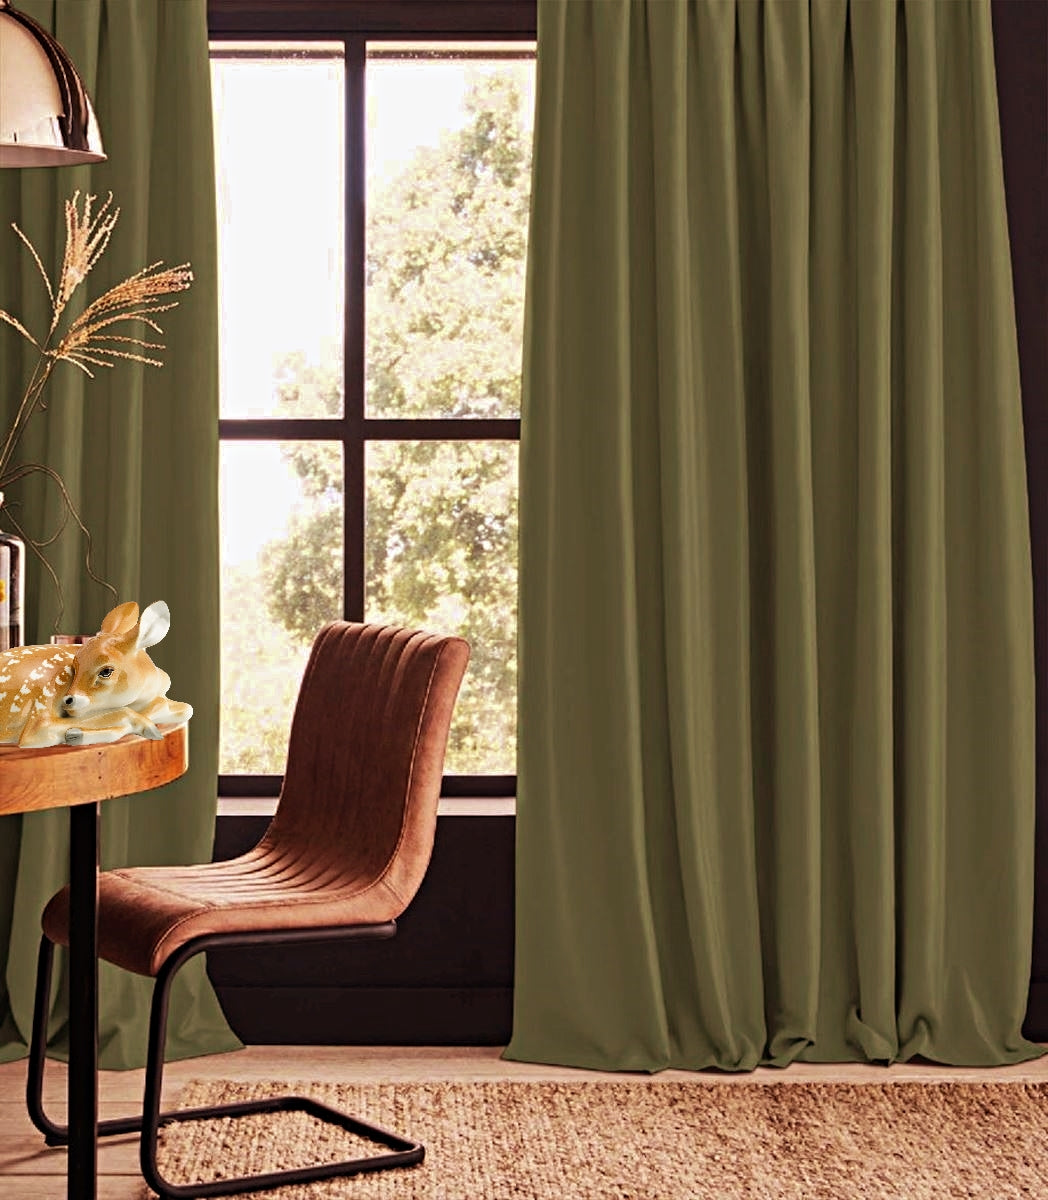 Night curtain olive green Lina